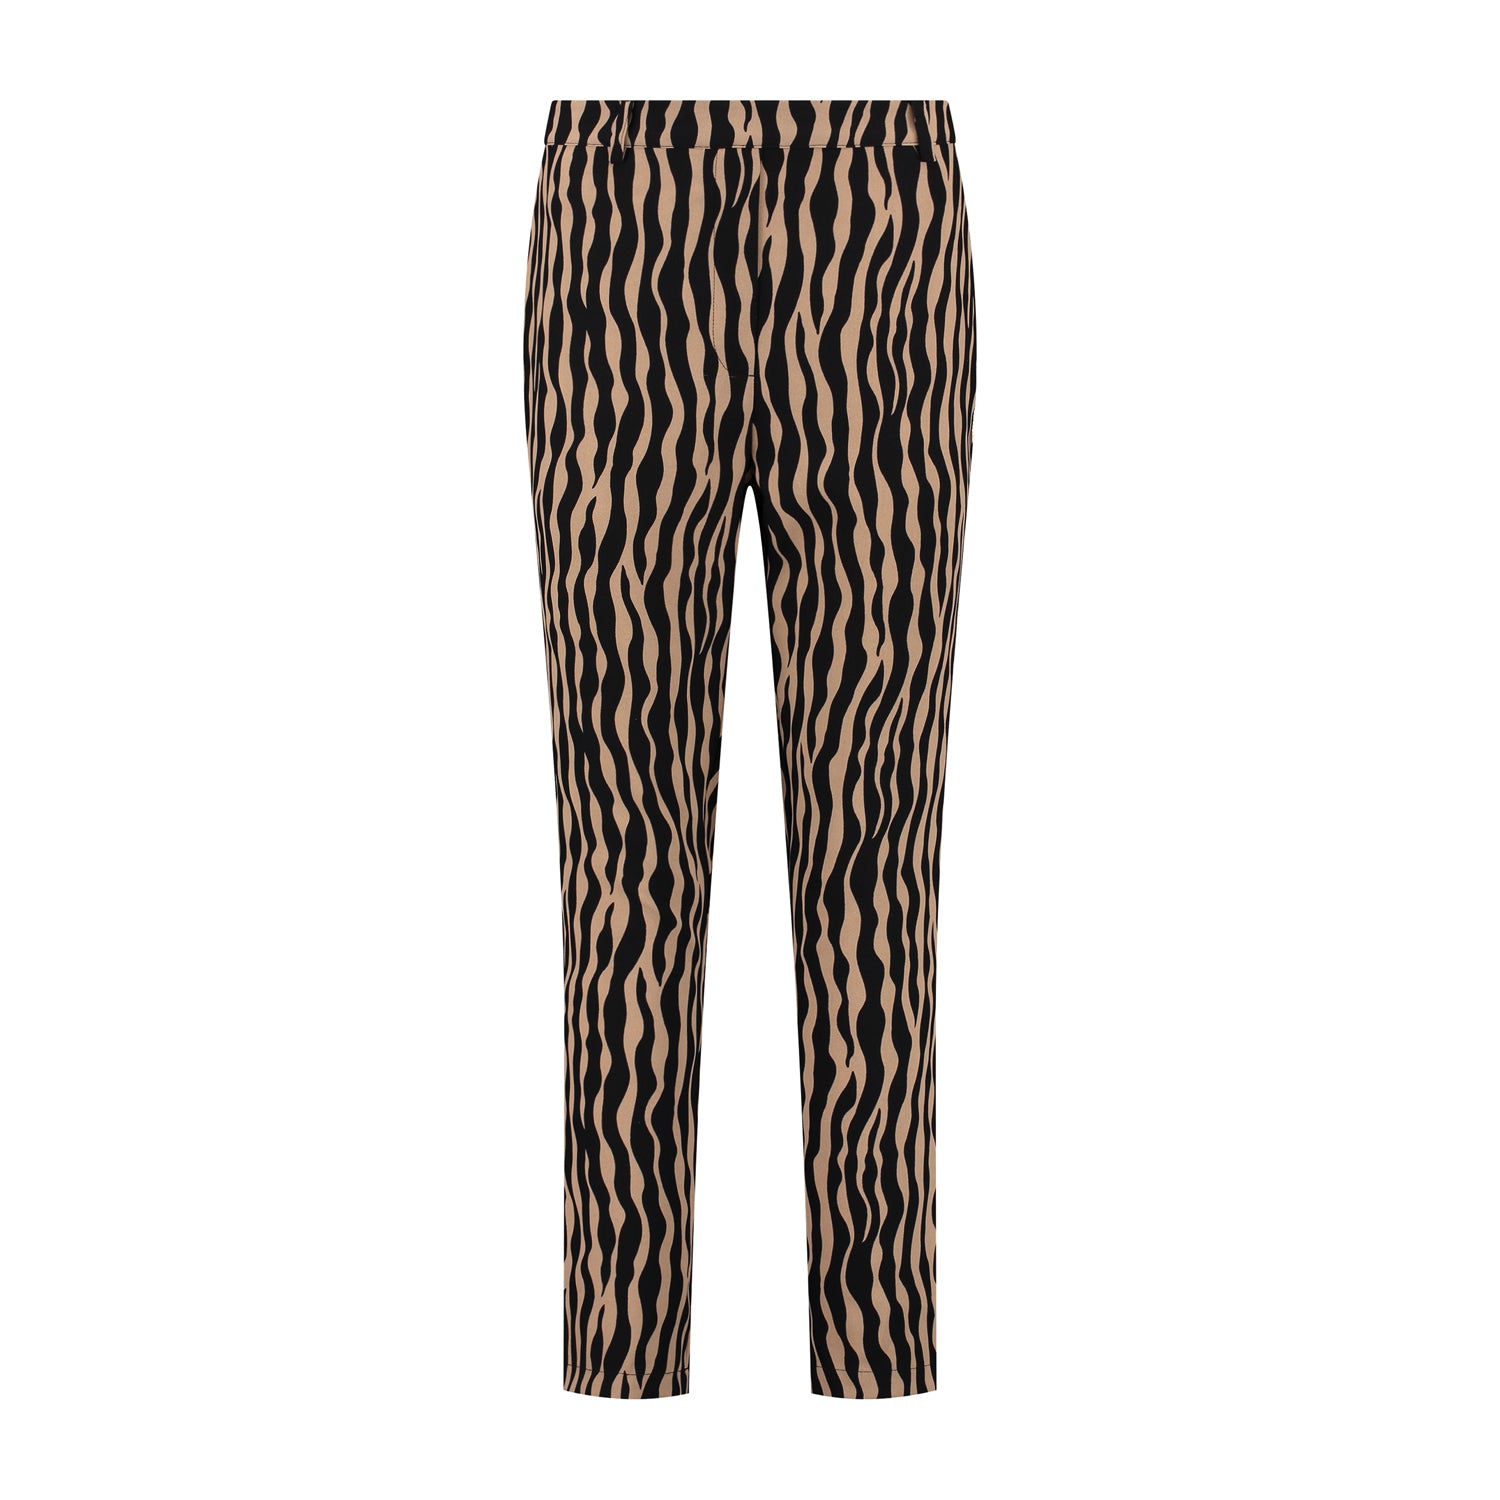 June pants - zebra